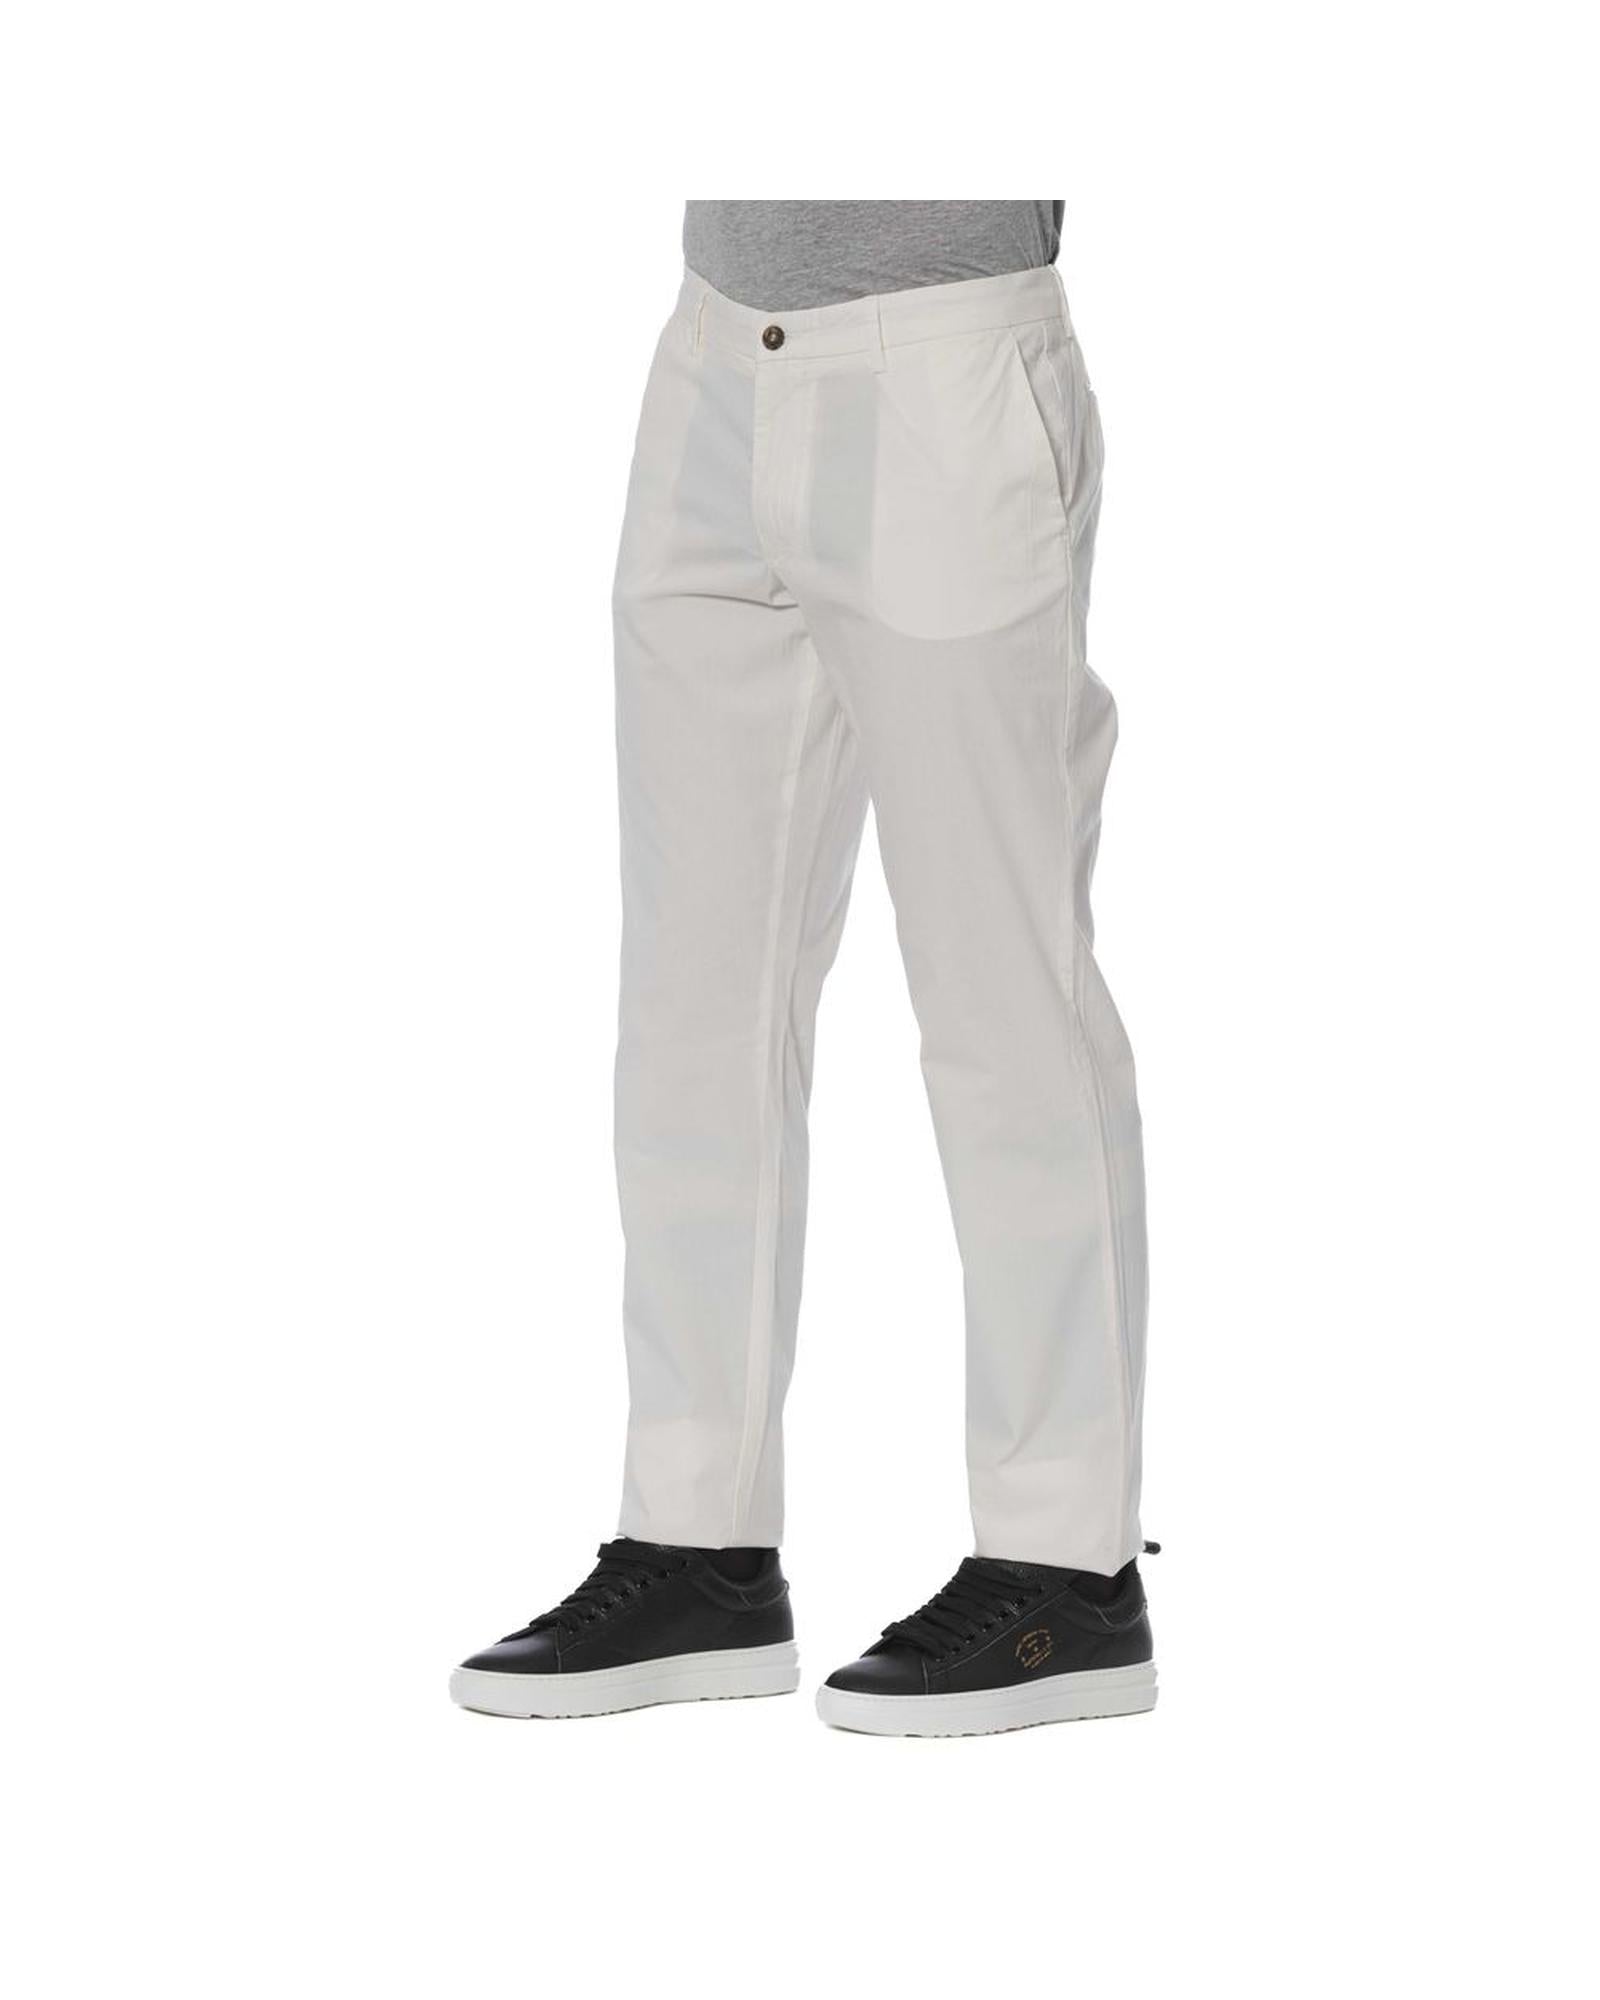 Men's White Cotton Jeans & Pant - W54 US